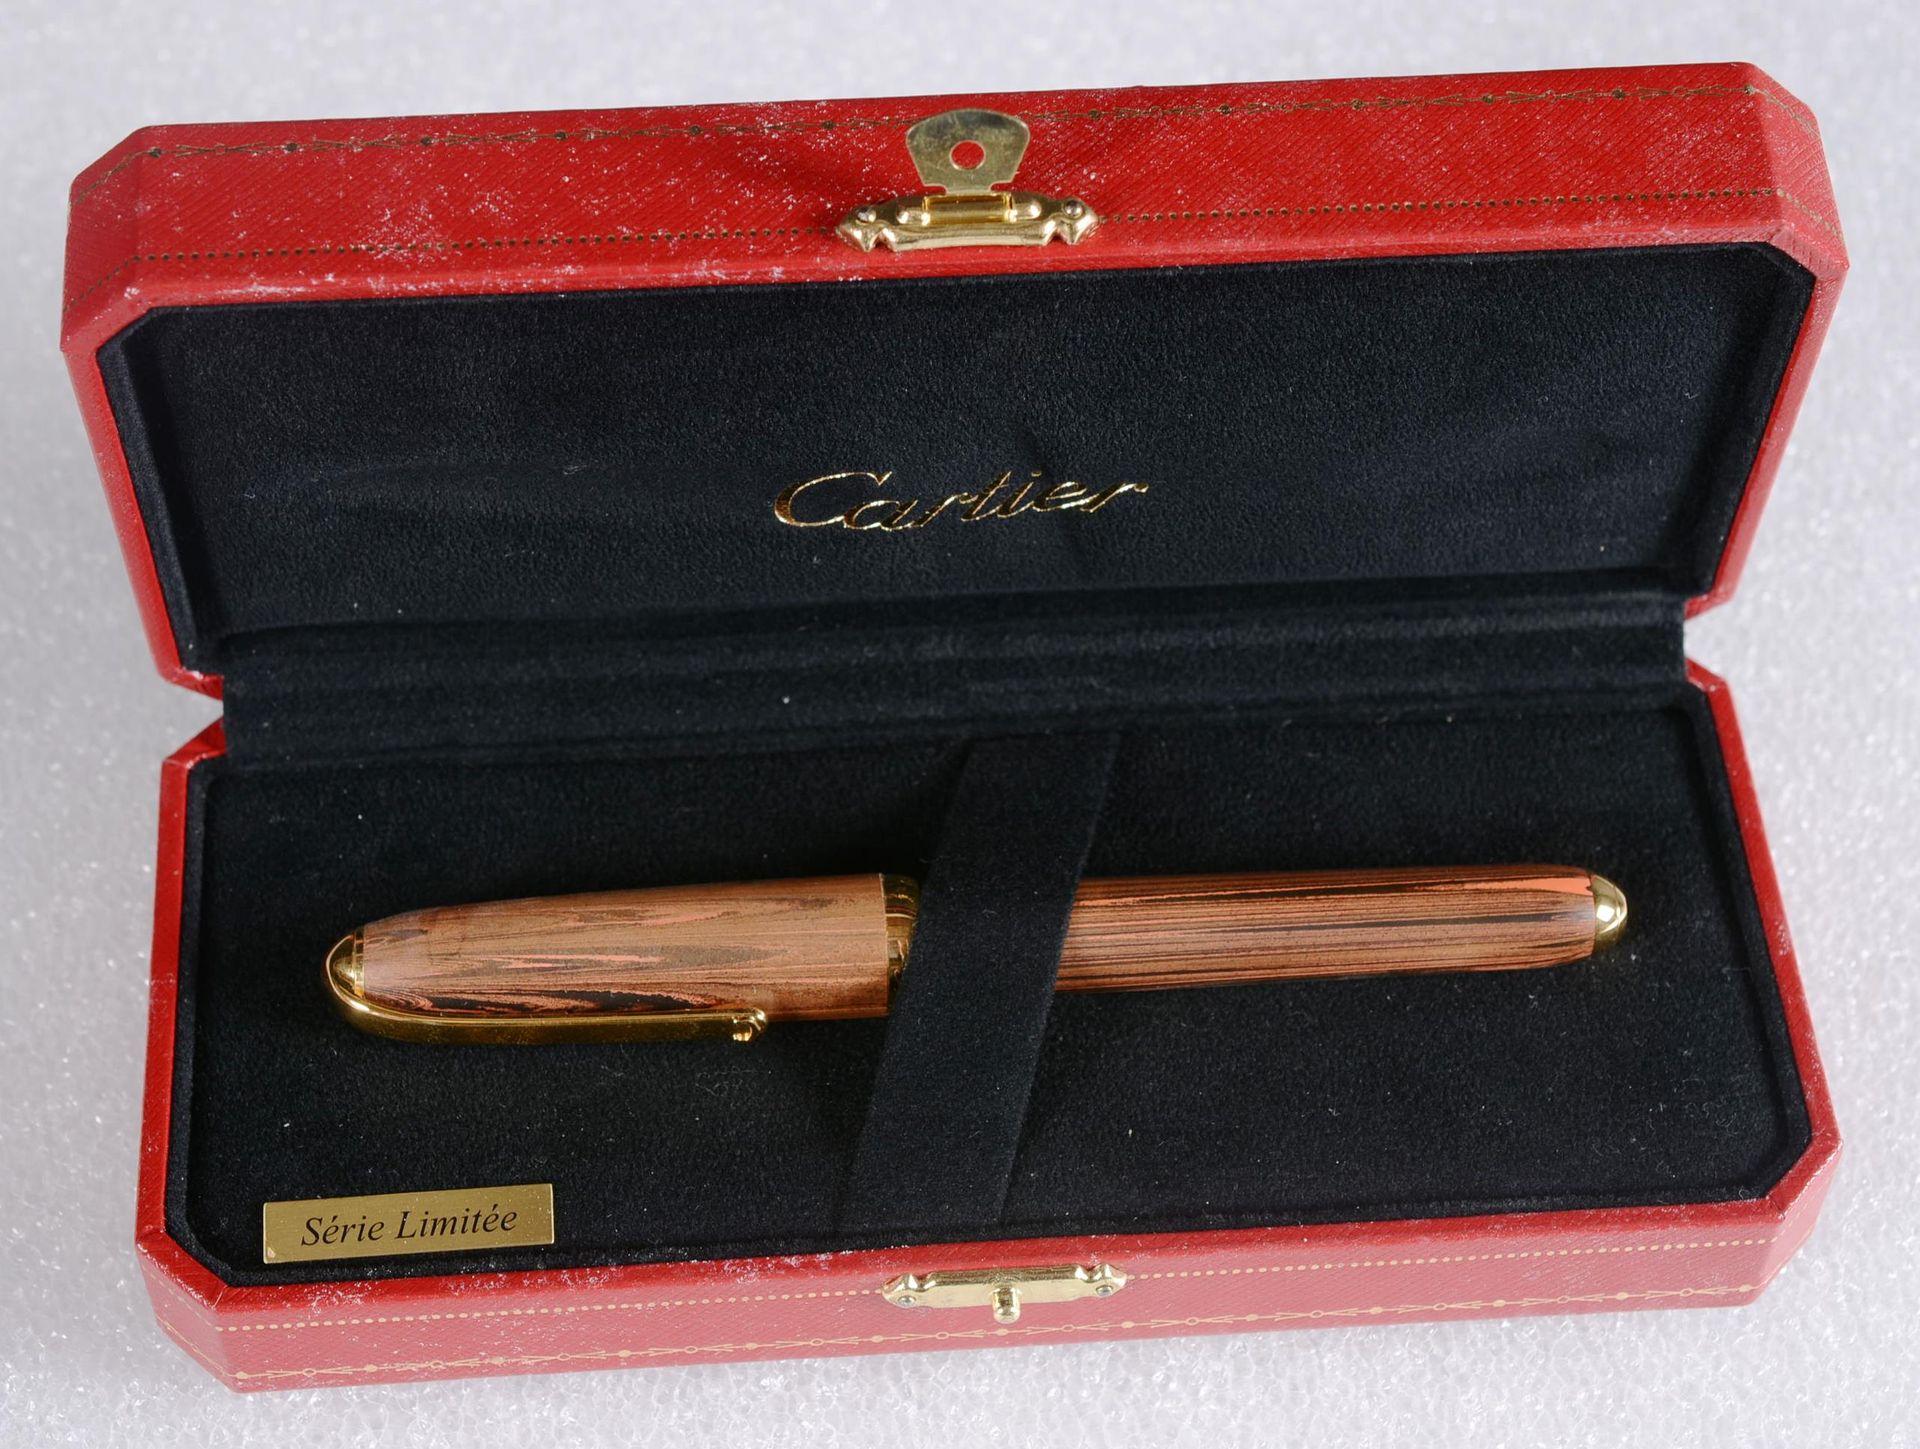 CARTIER, Stylo plume 卡地亚

来自Louis Cartier系列的钢笔，采用乌木材质，限量制作，编号为0349/1847。